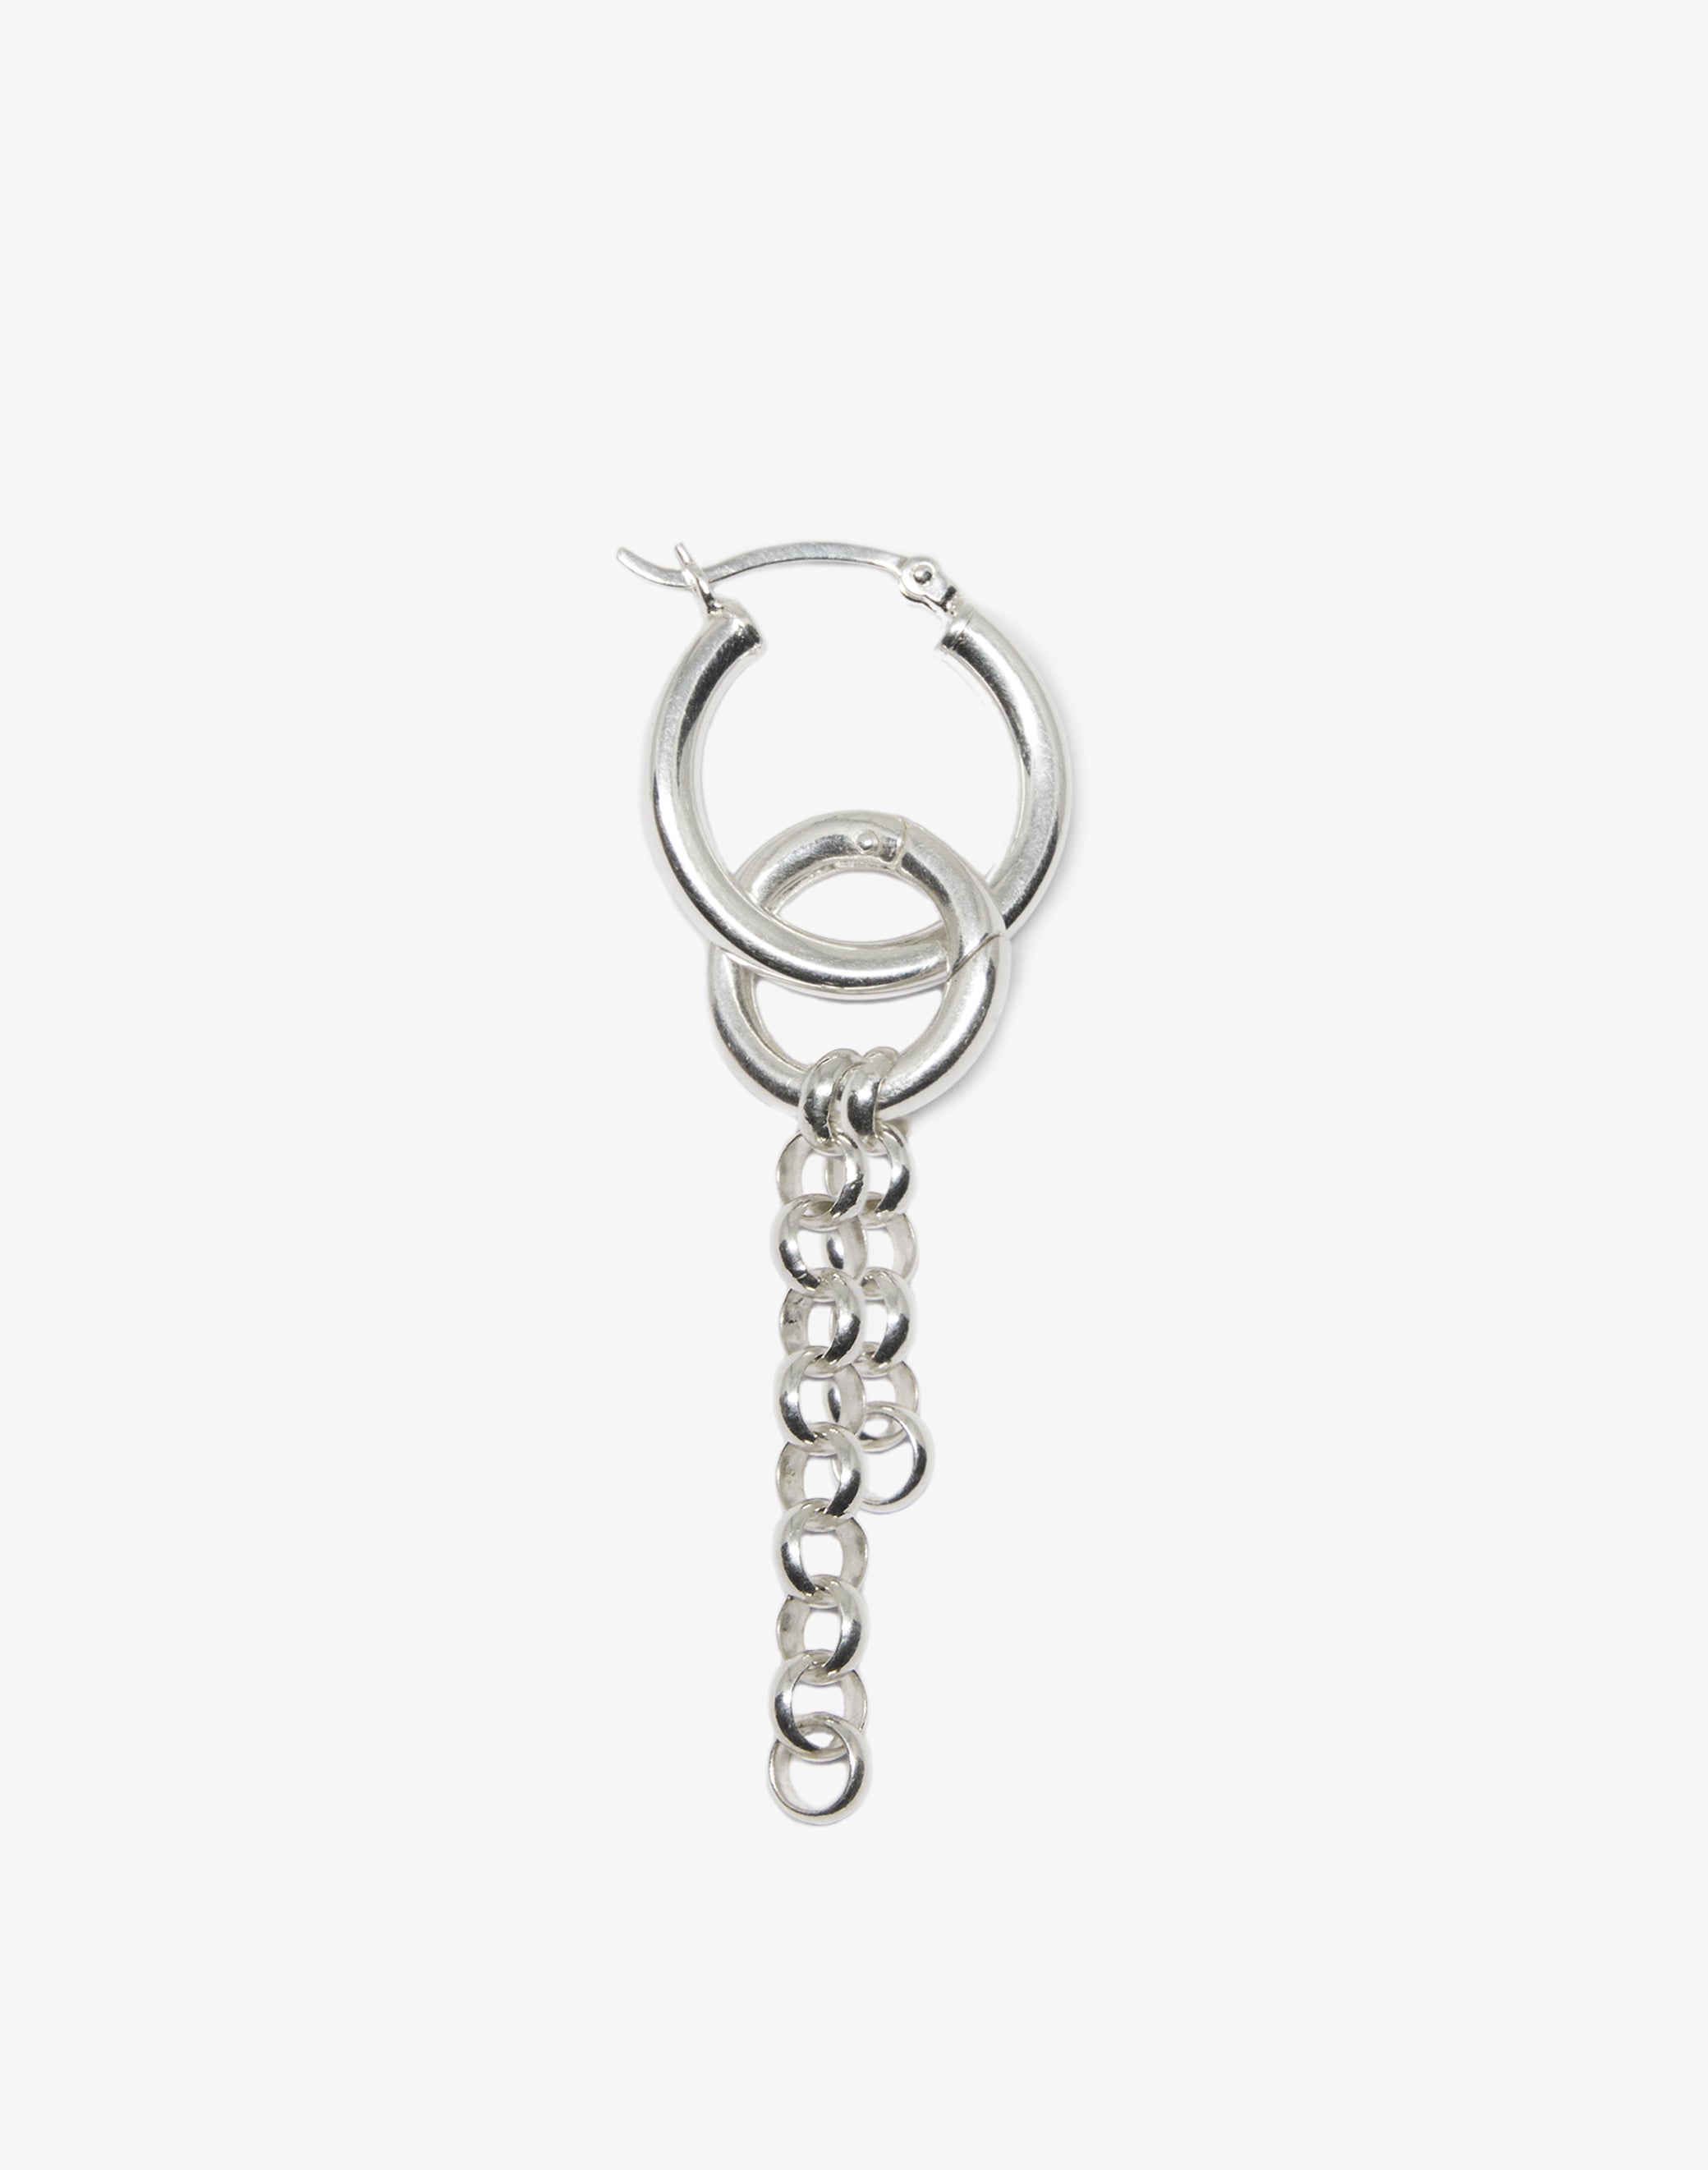 llayers jewelry minimal women silver chain hoops earrings jewelry minimal - Made in Brooklyn New York F2